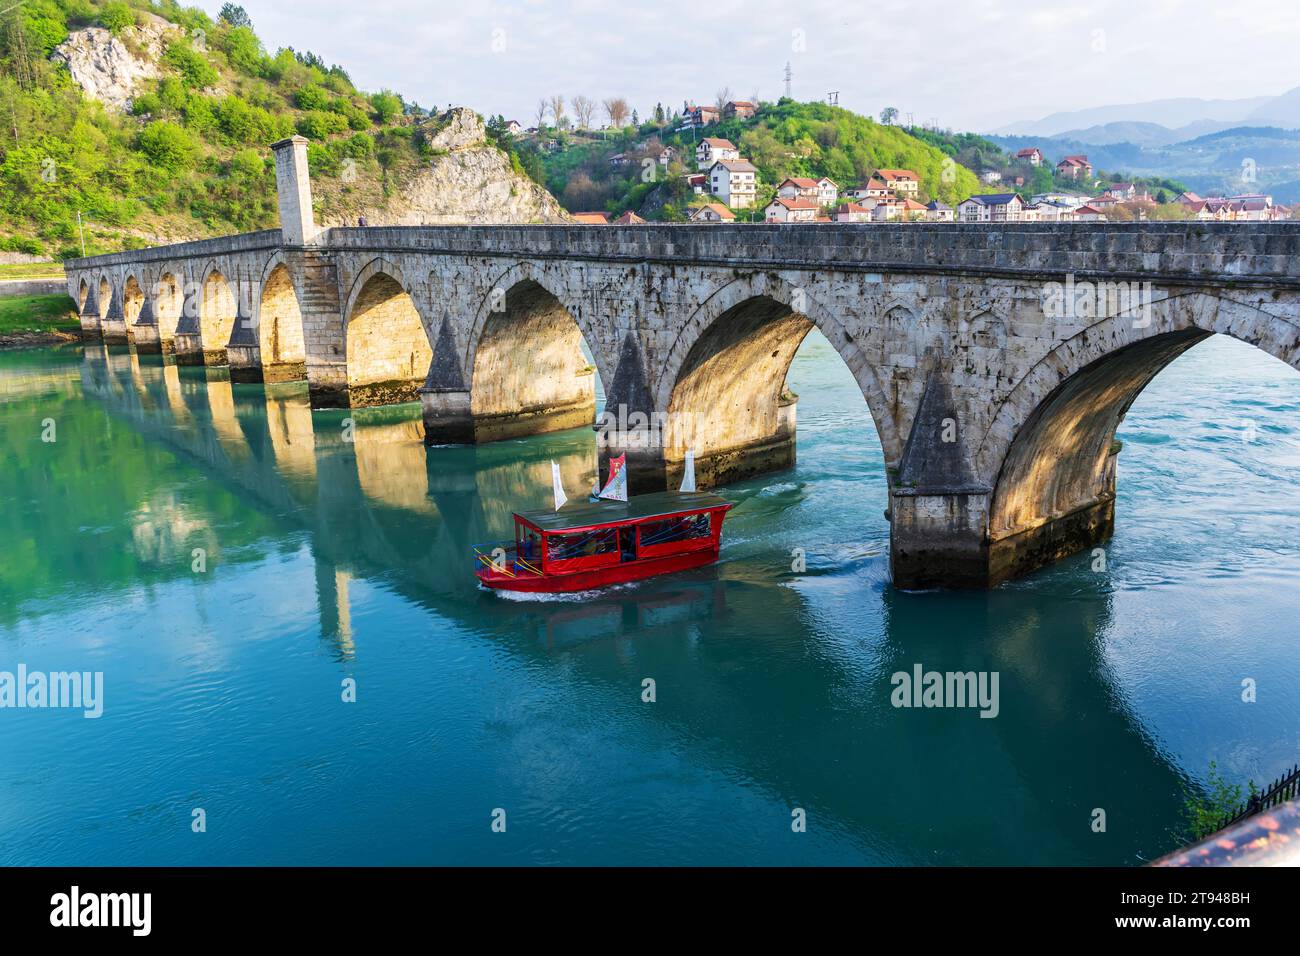 The tourist boat passes under the famous bridge on the Drina River in Visegrad, Bosnia and Herzegovina. Stock Photo